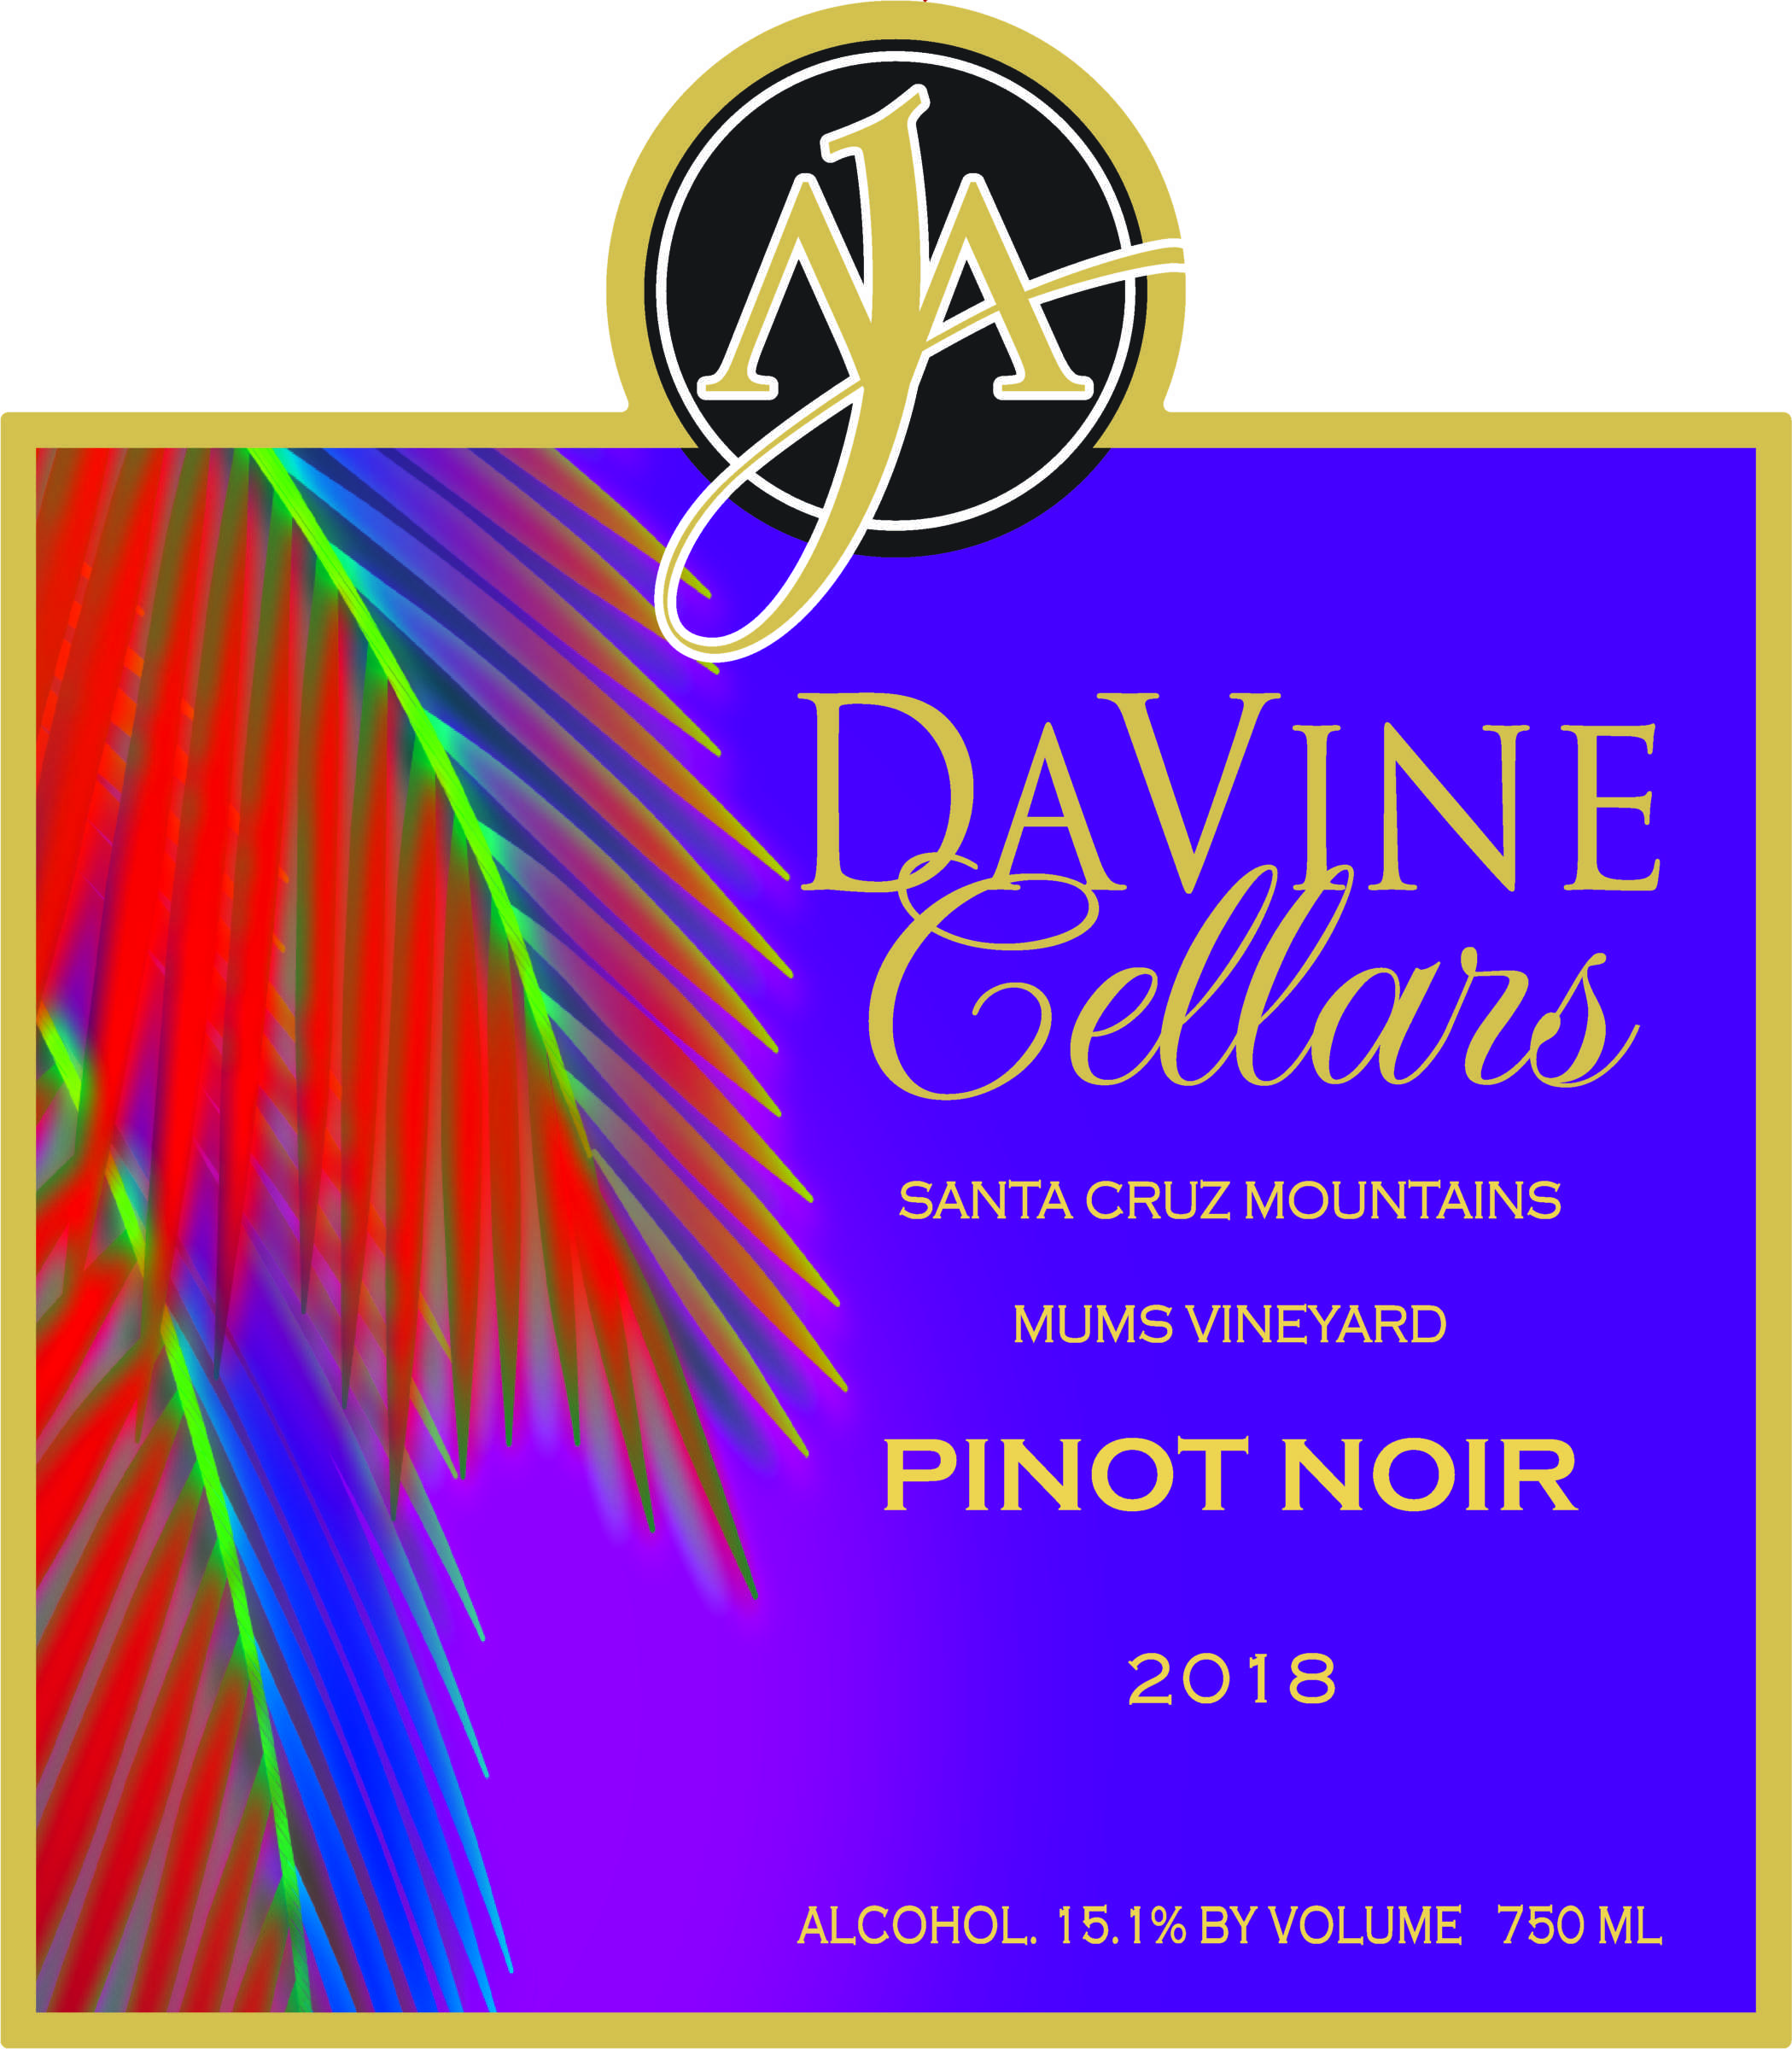 Product Image for 2018 Santa Cruz Mountains Muns Vineyard Pinot Noir "Foxtrot"